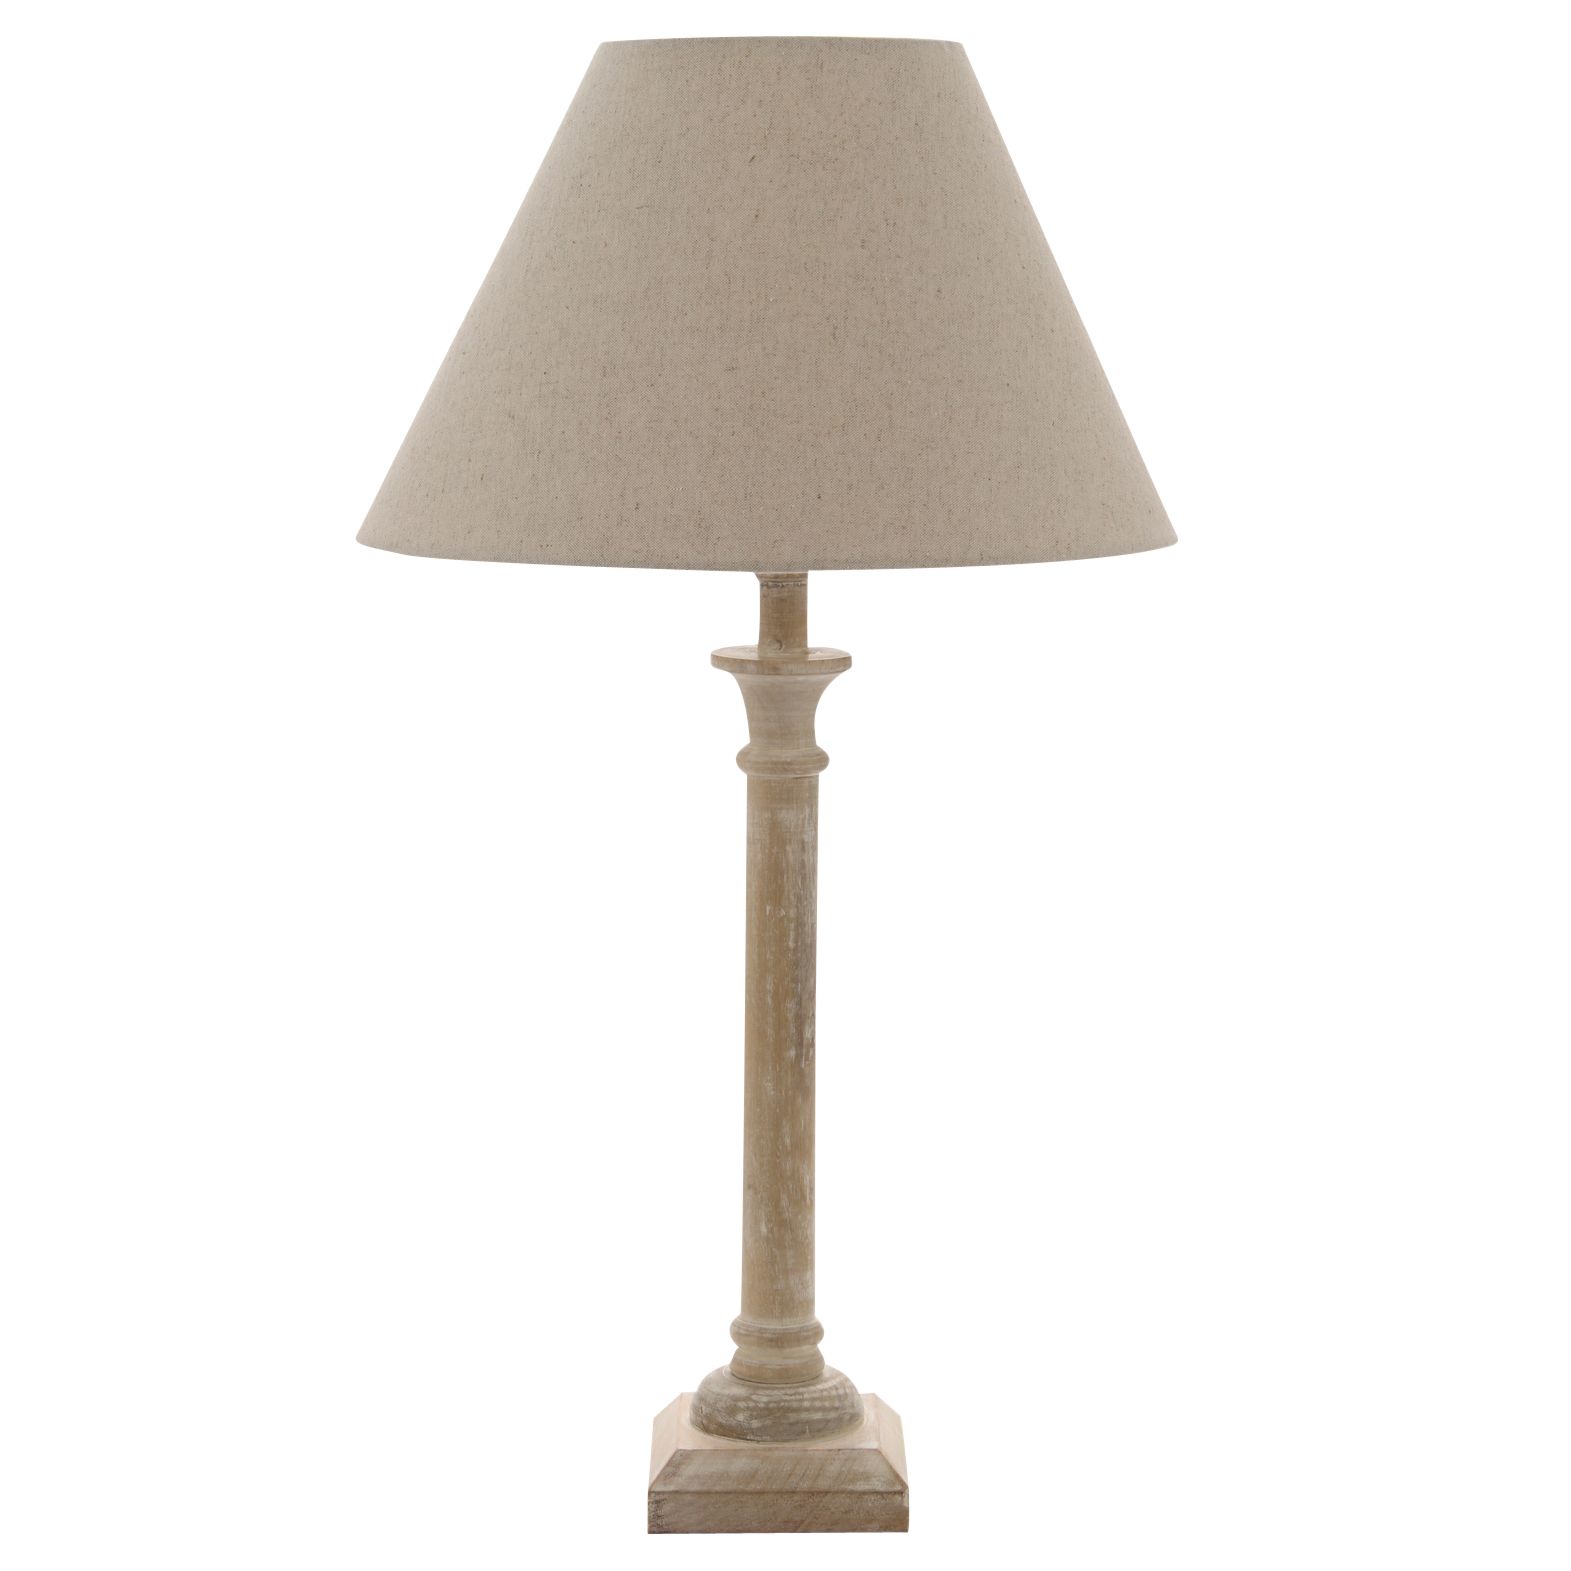 John Lewis Aspen Table Lamp